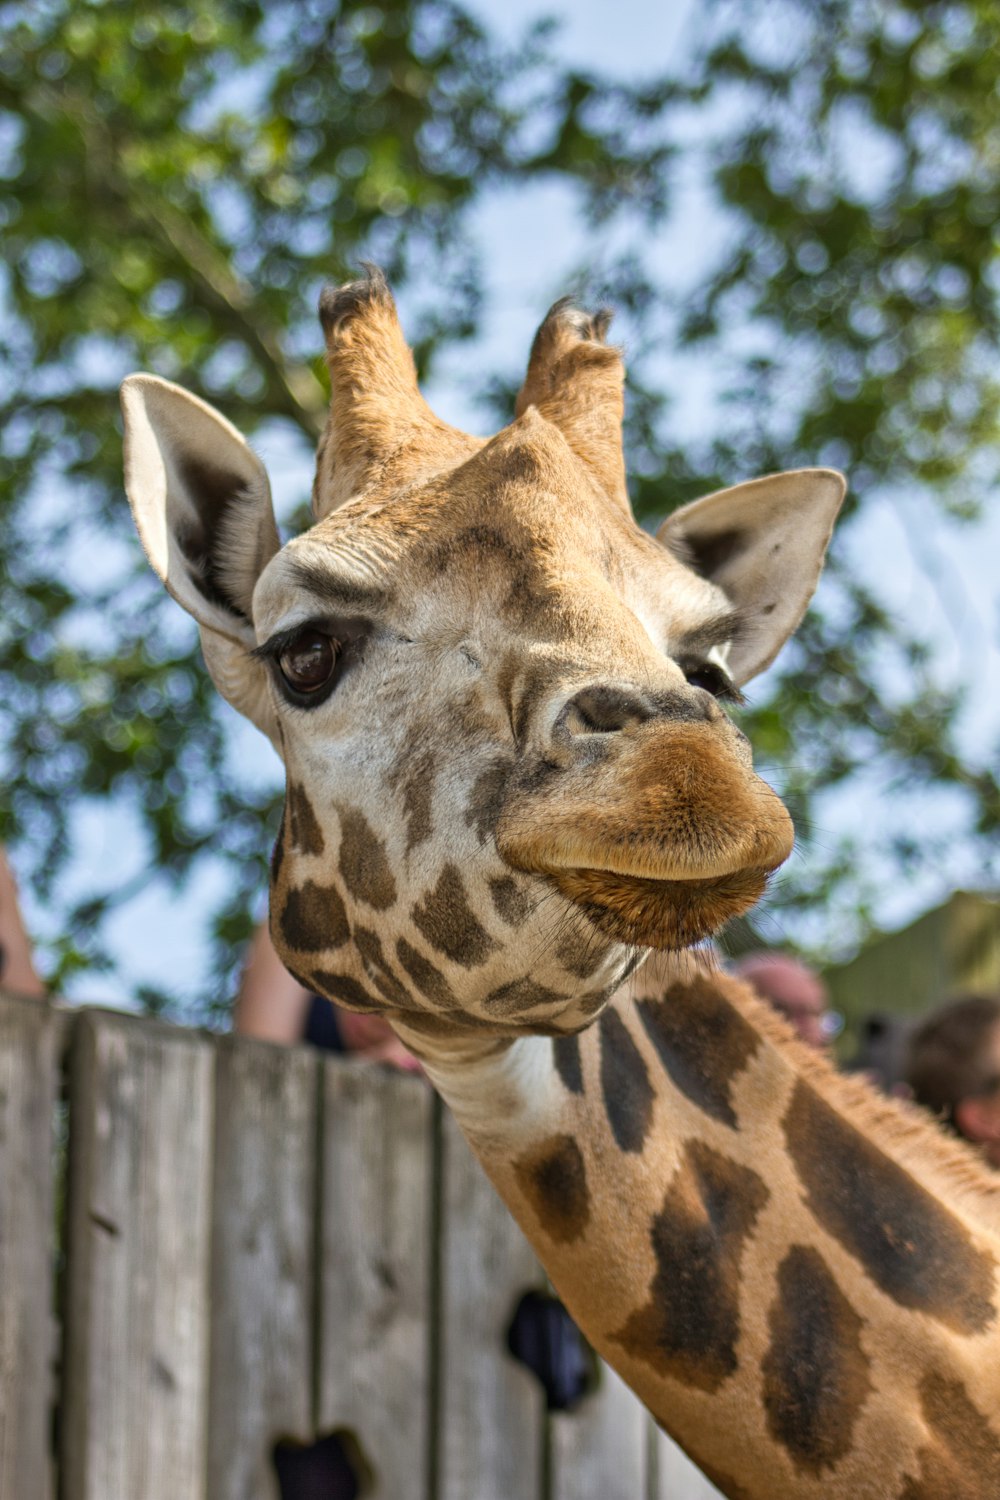 a giraffe licking a person's hand